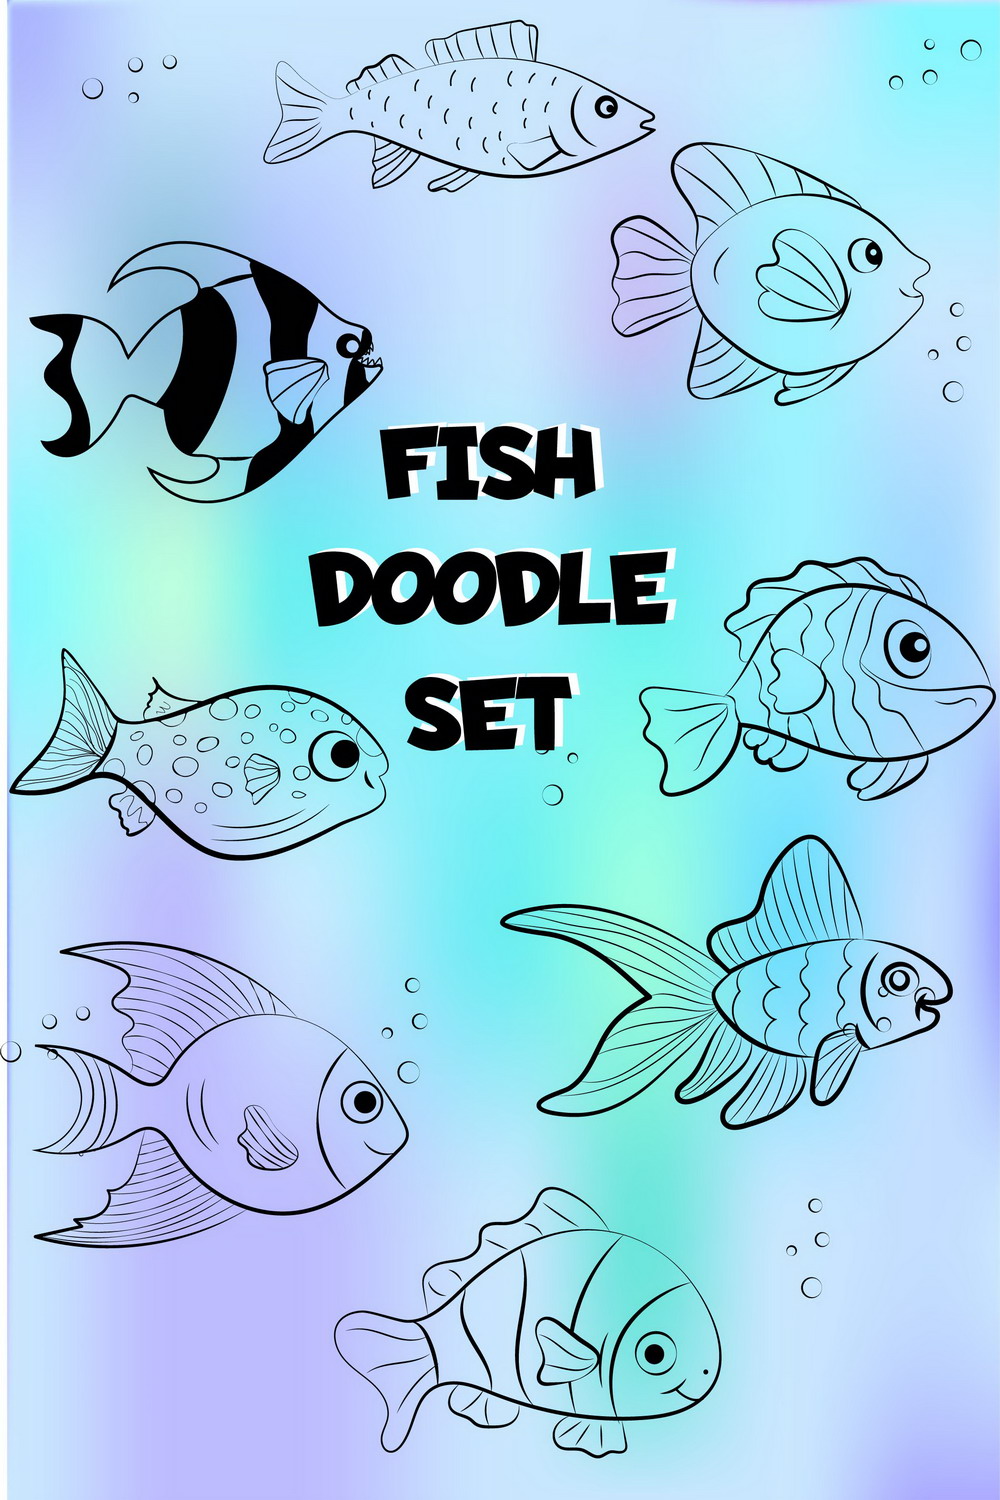 Nice Fish Doodle Set Illustrations pinterest image.